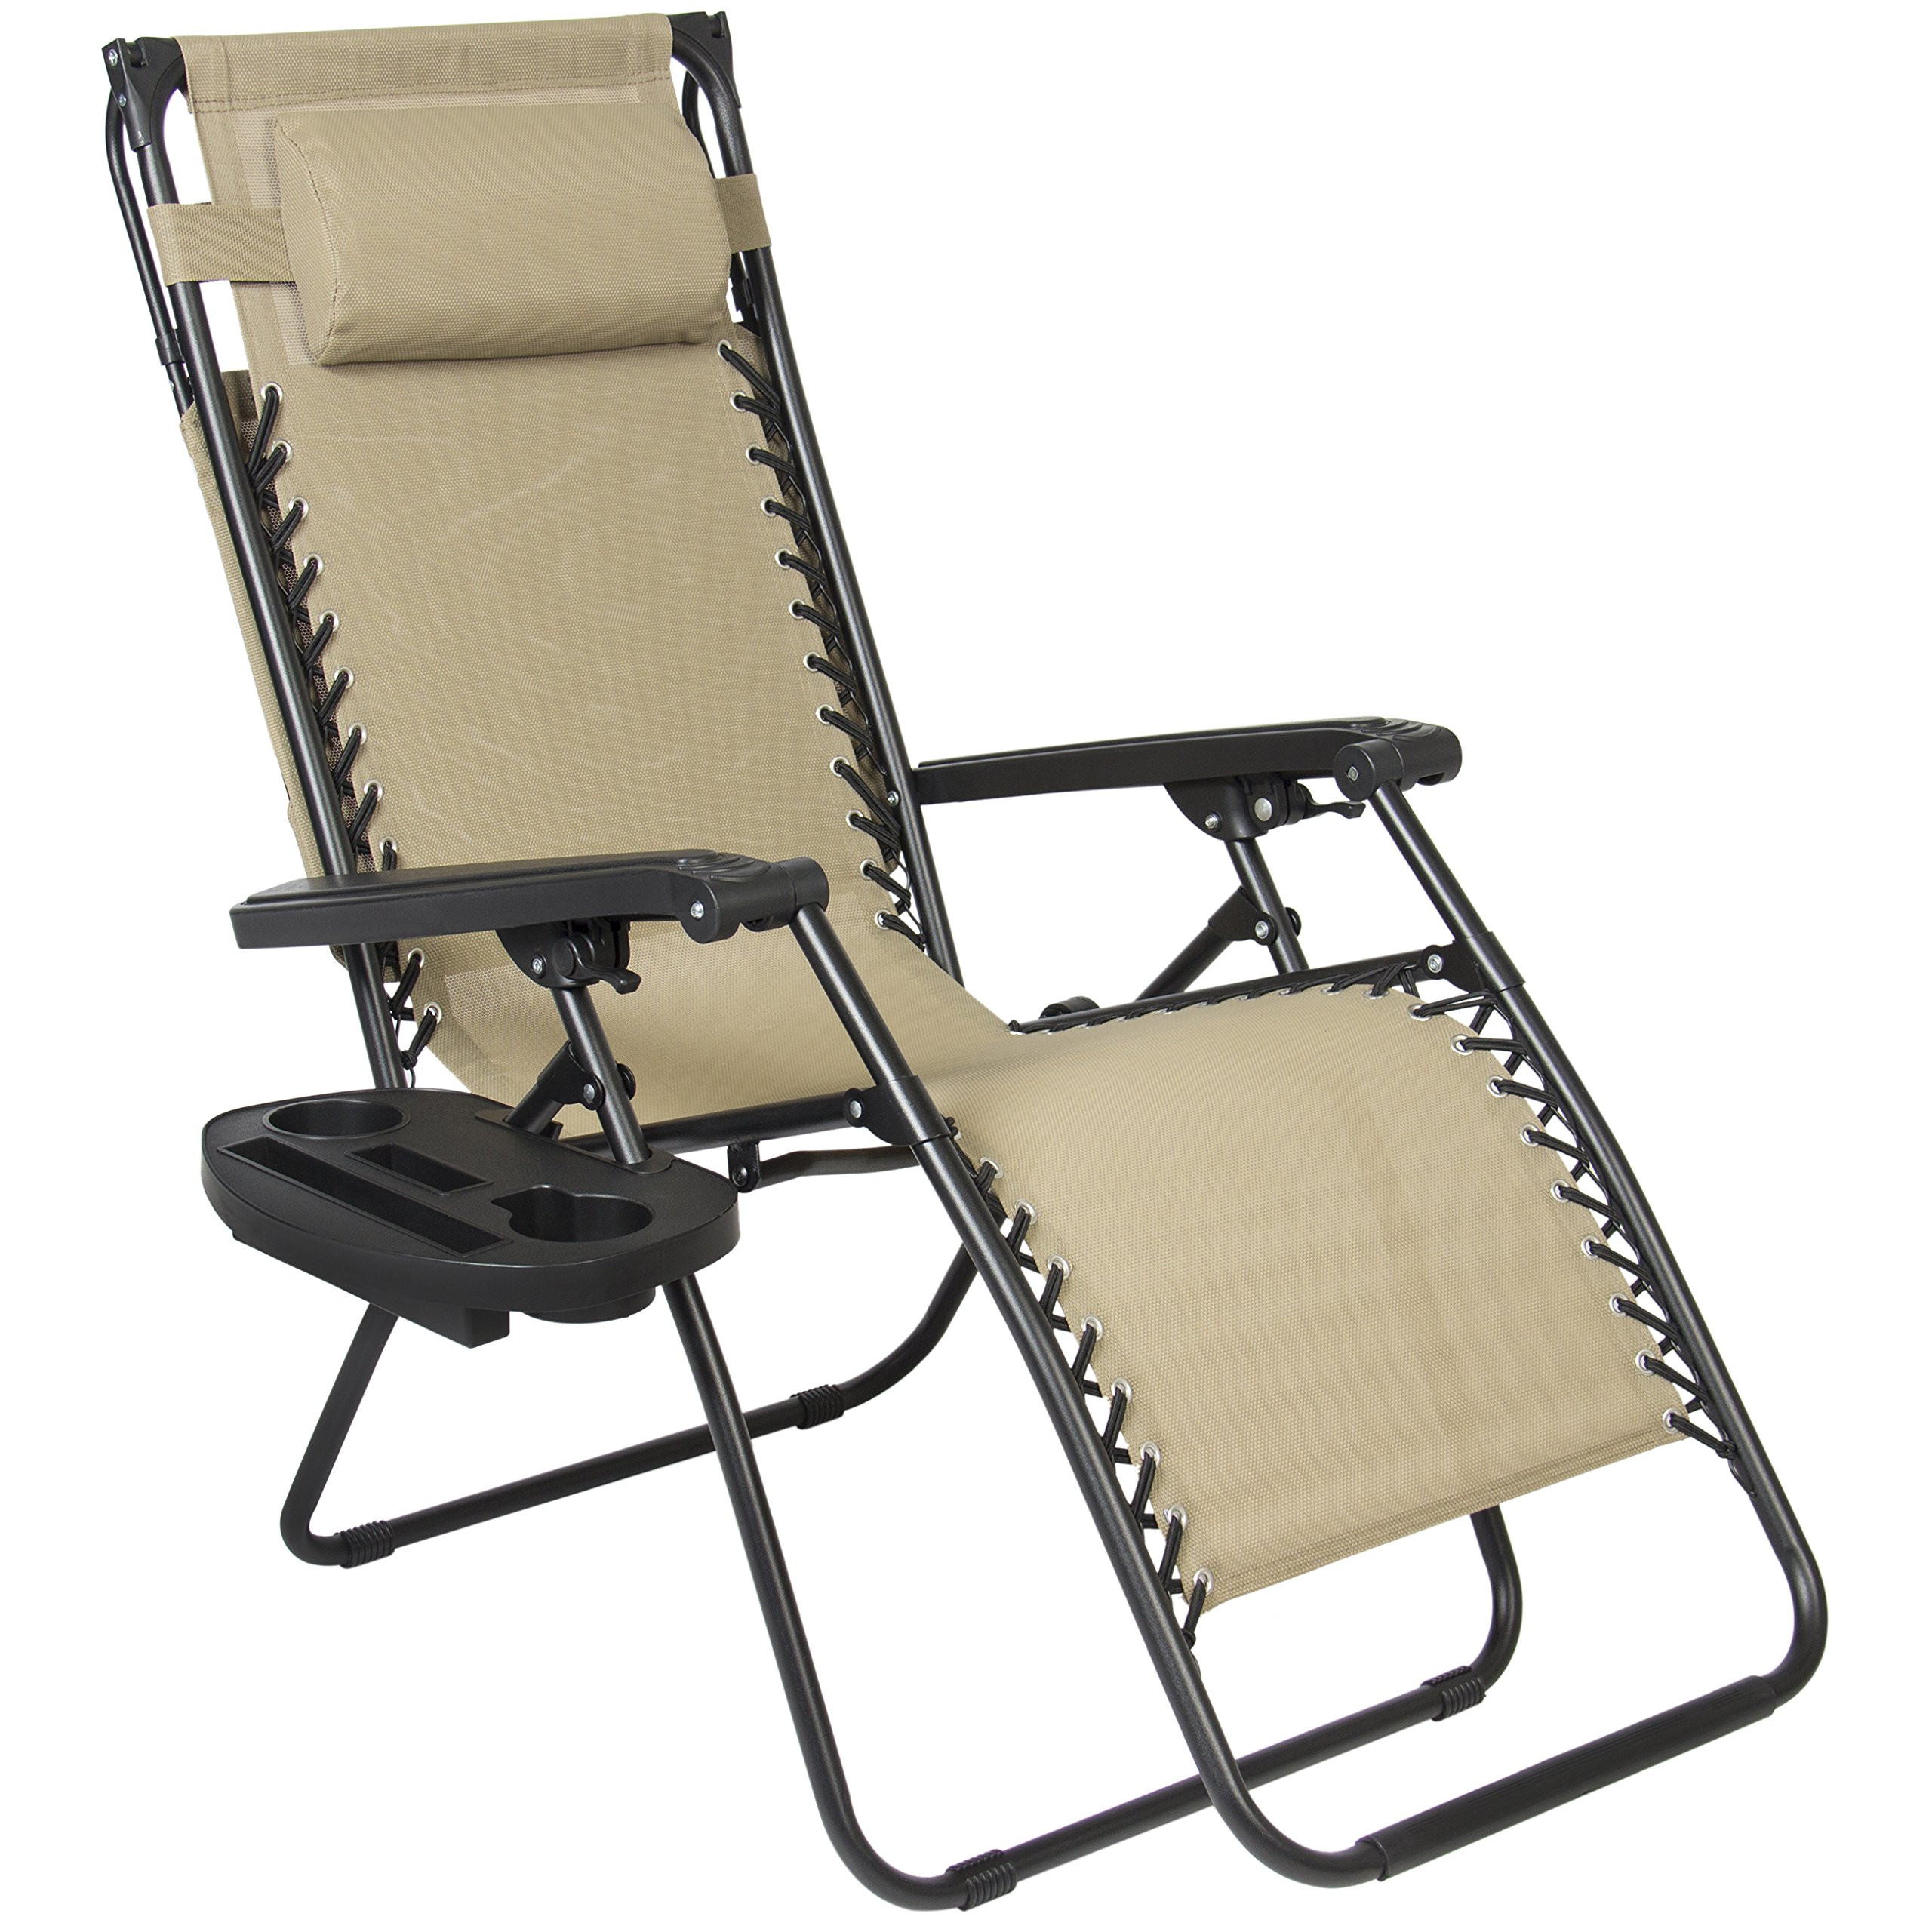 Best ideas about Timber Ridge Zero Gravity Chair
. Save or Pin Galleon Timber Ridge Oversized XL Padded Zero Gravity Now.